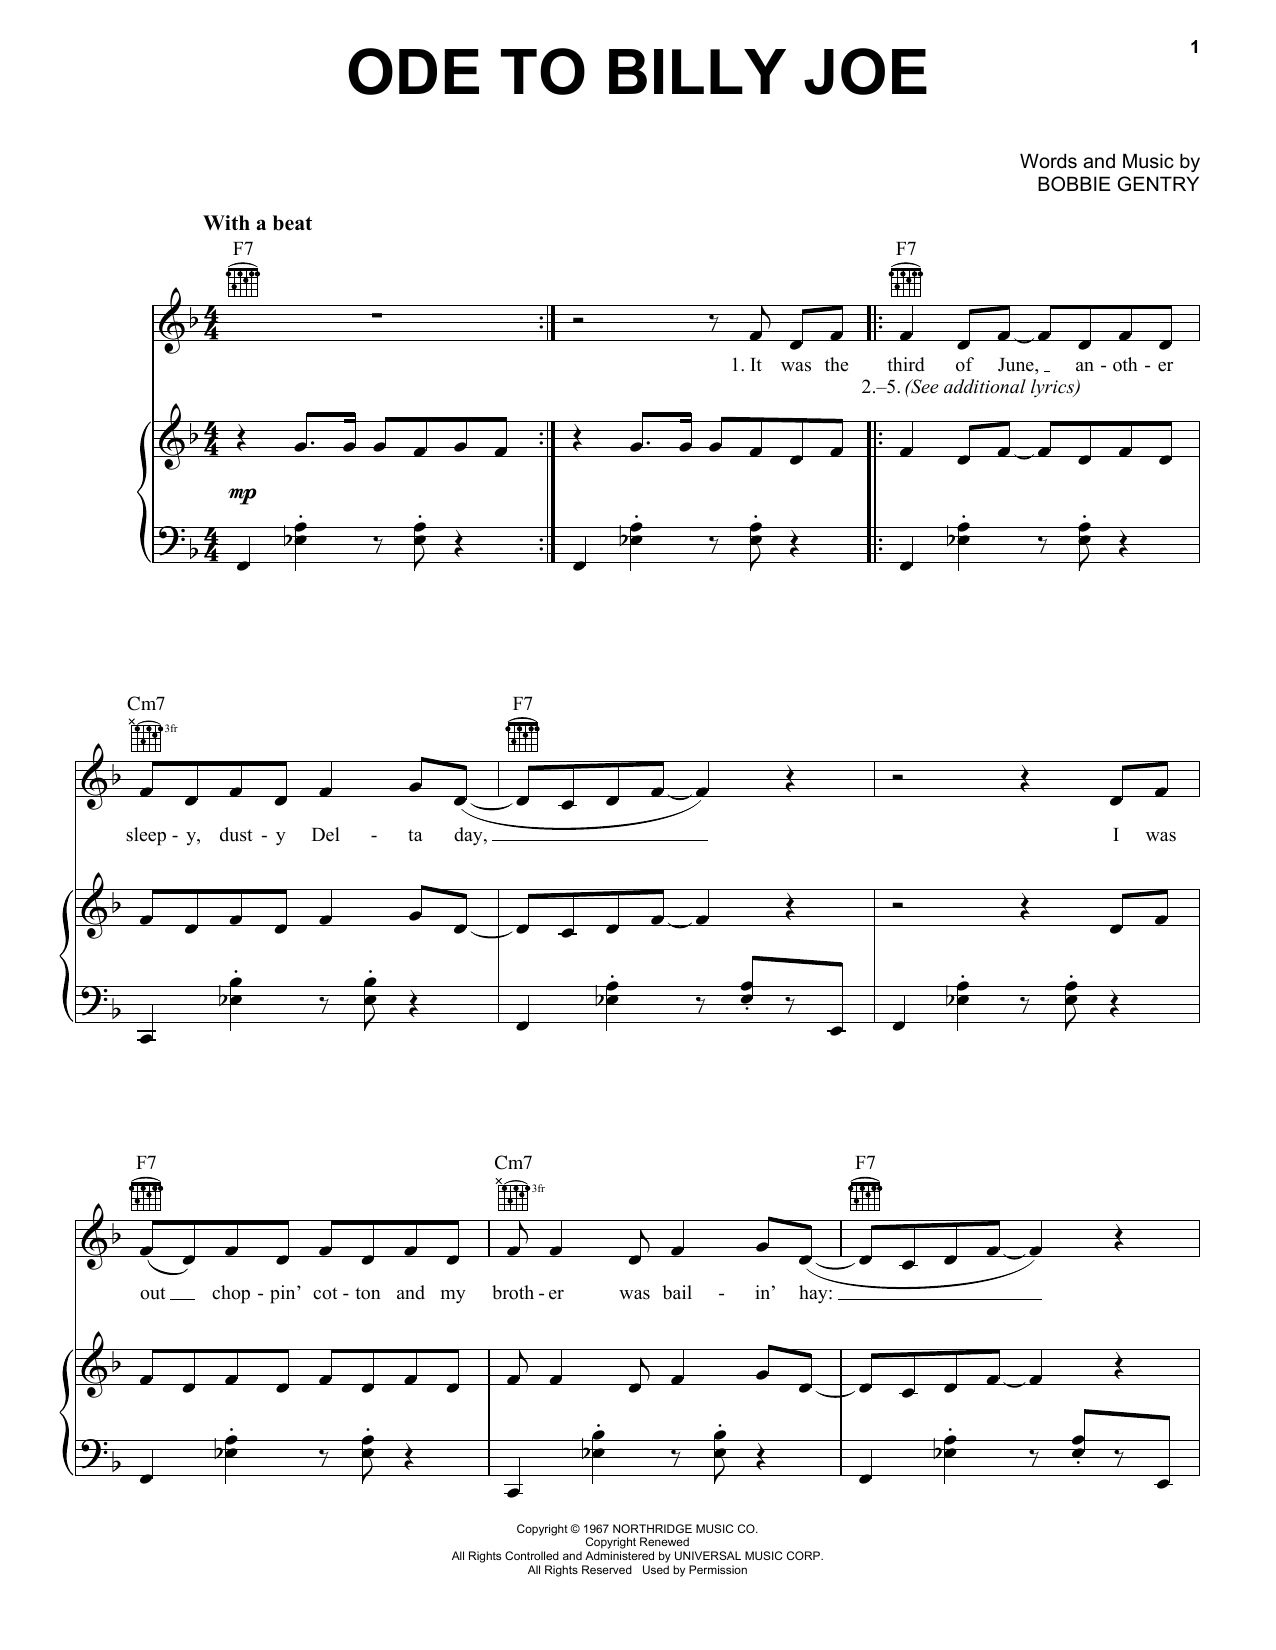 Bobbie Gentry Ode To Billy Joe Sheet Music Notes & Chords for Banjo Tab - Download or Print PDF